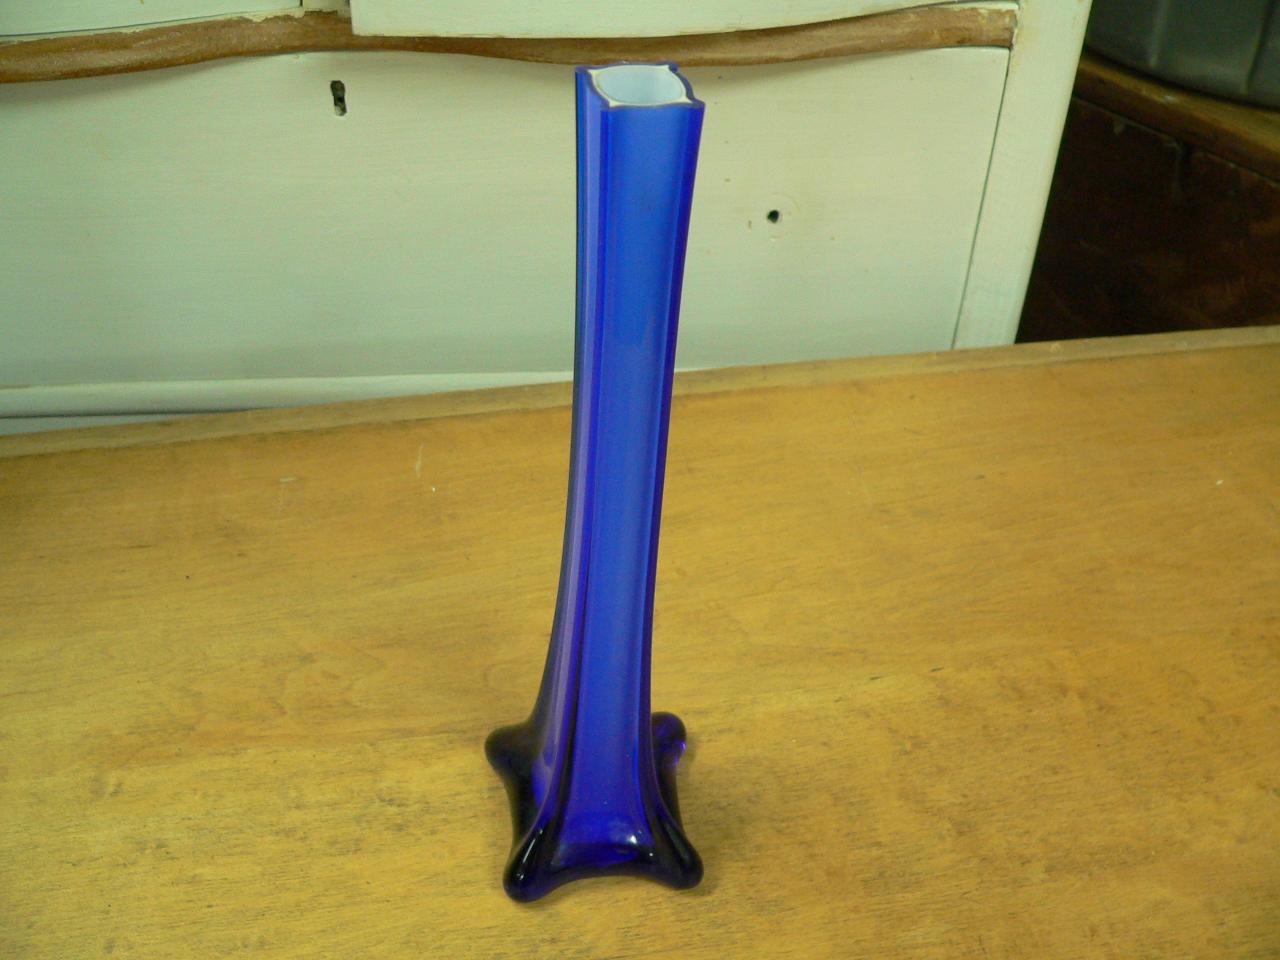 Beau vase en verre bleu # 3467